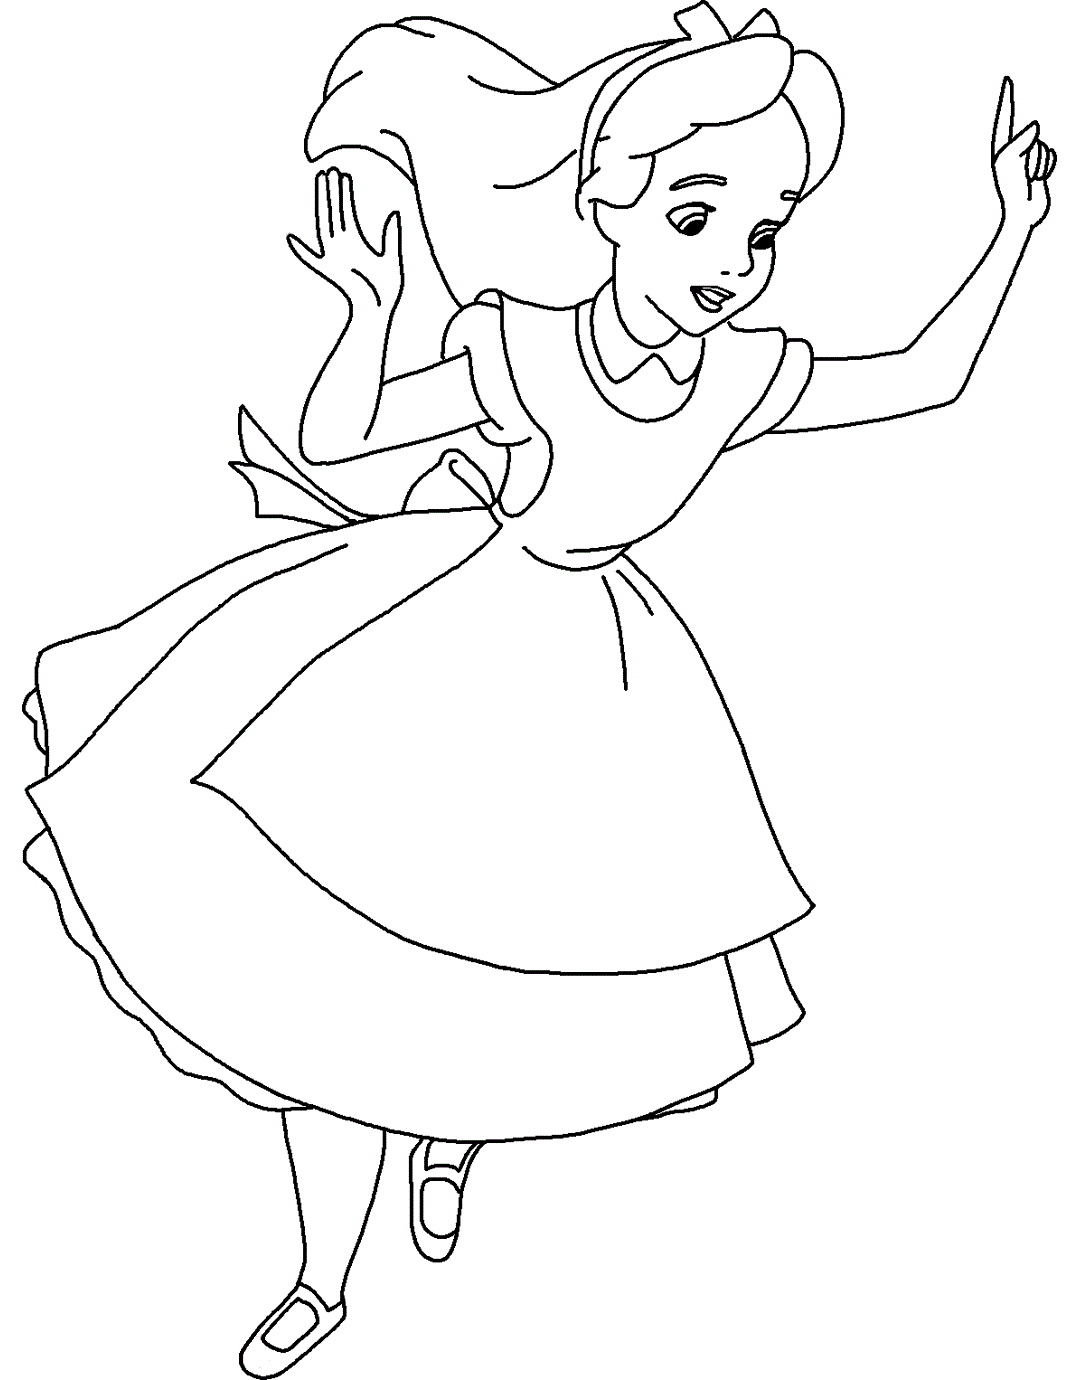 Alice in Wonderland Coloring Pages Cartoons 1545727325_alicec1 Printable 2020 0341 Coloring4free